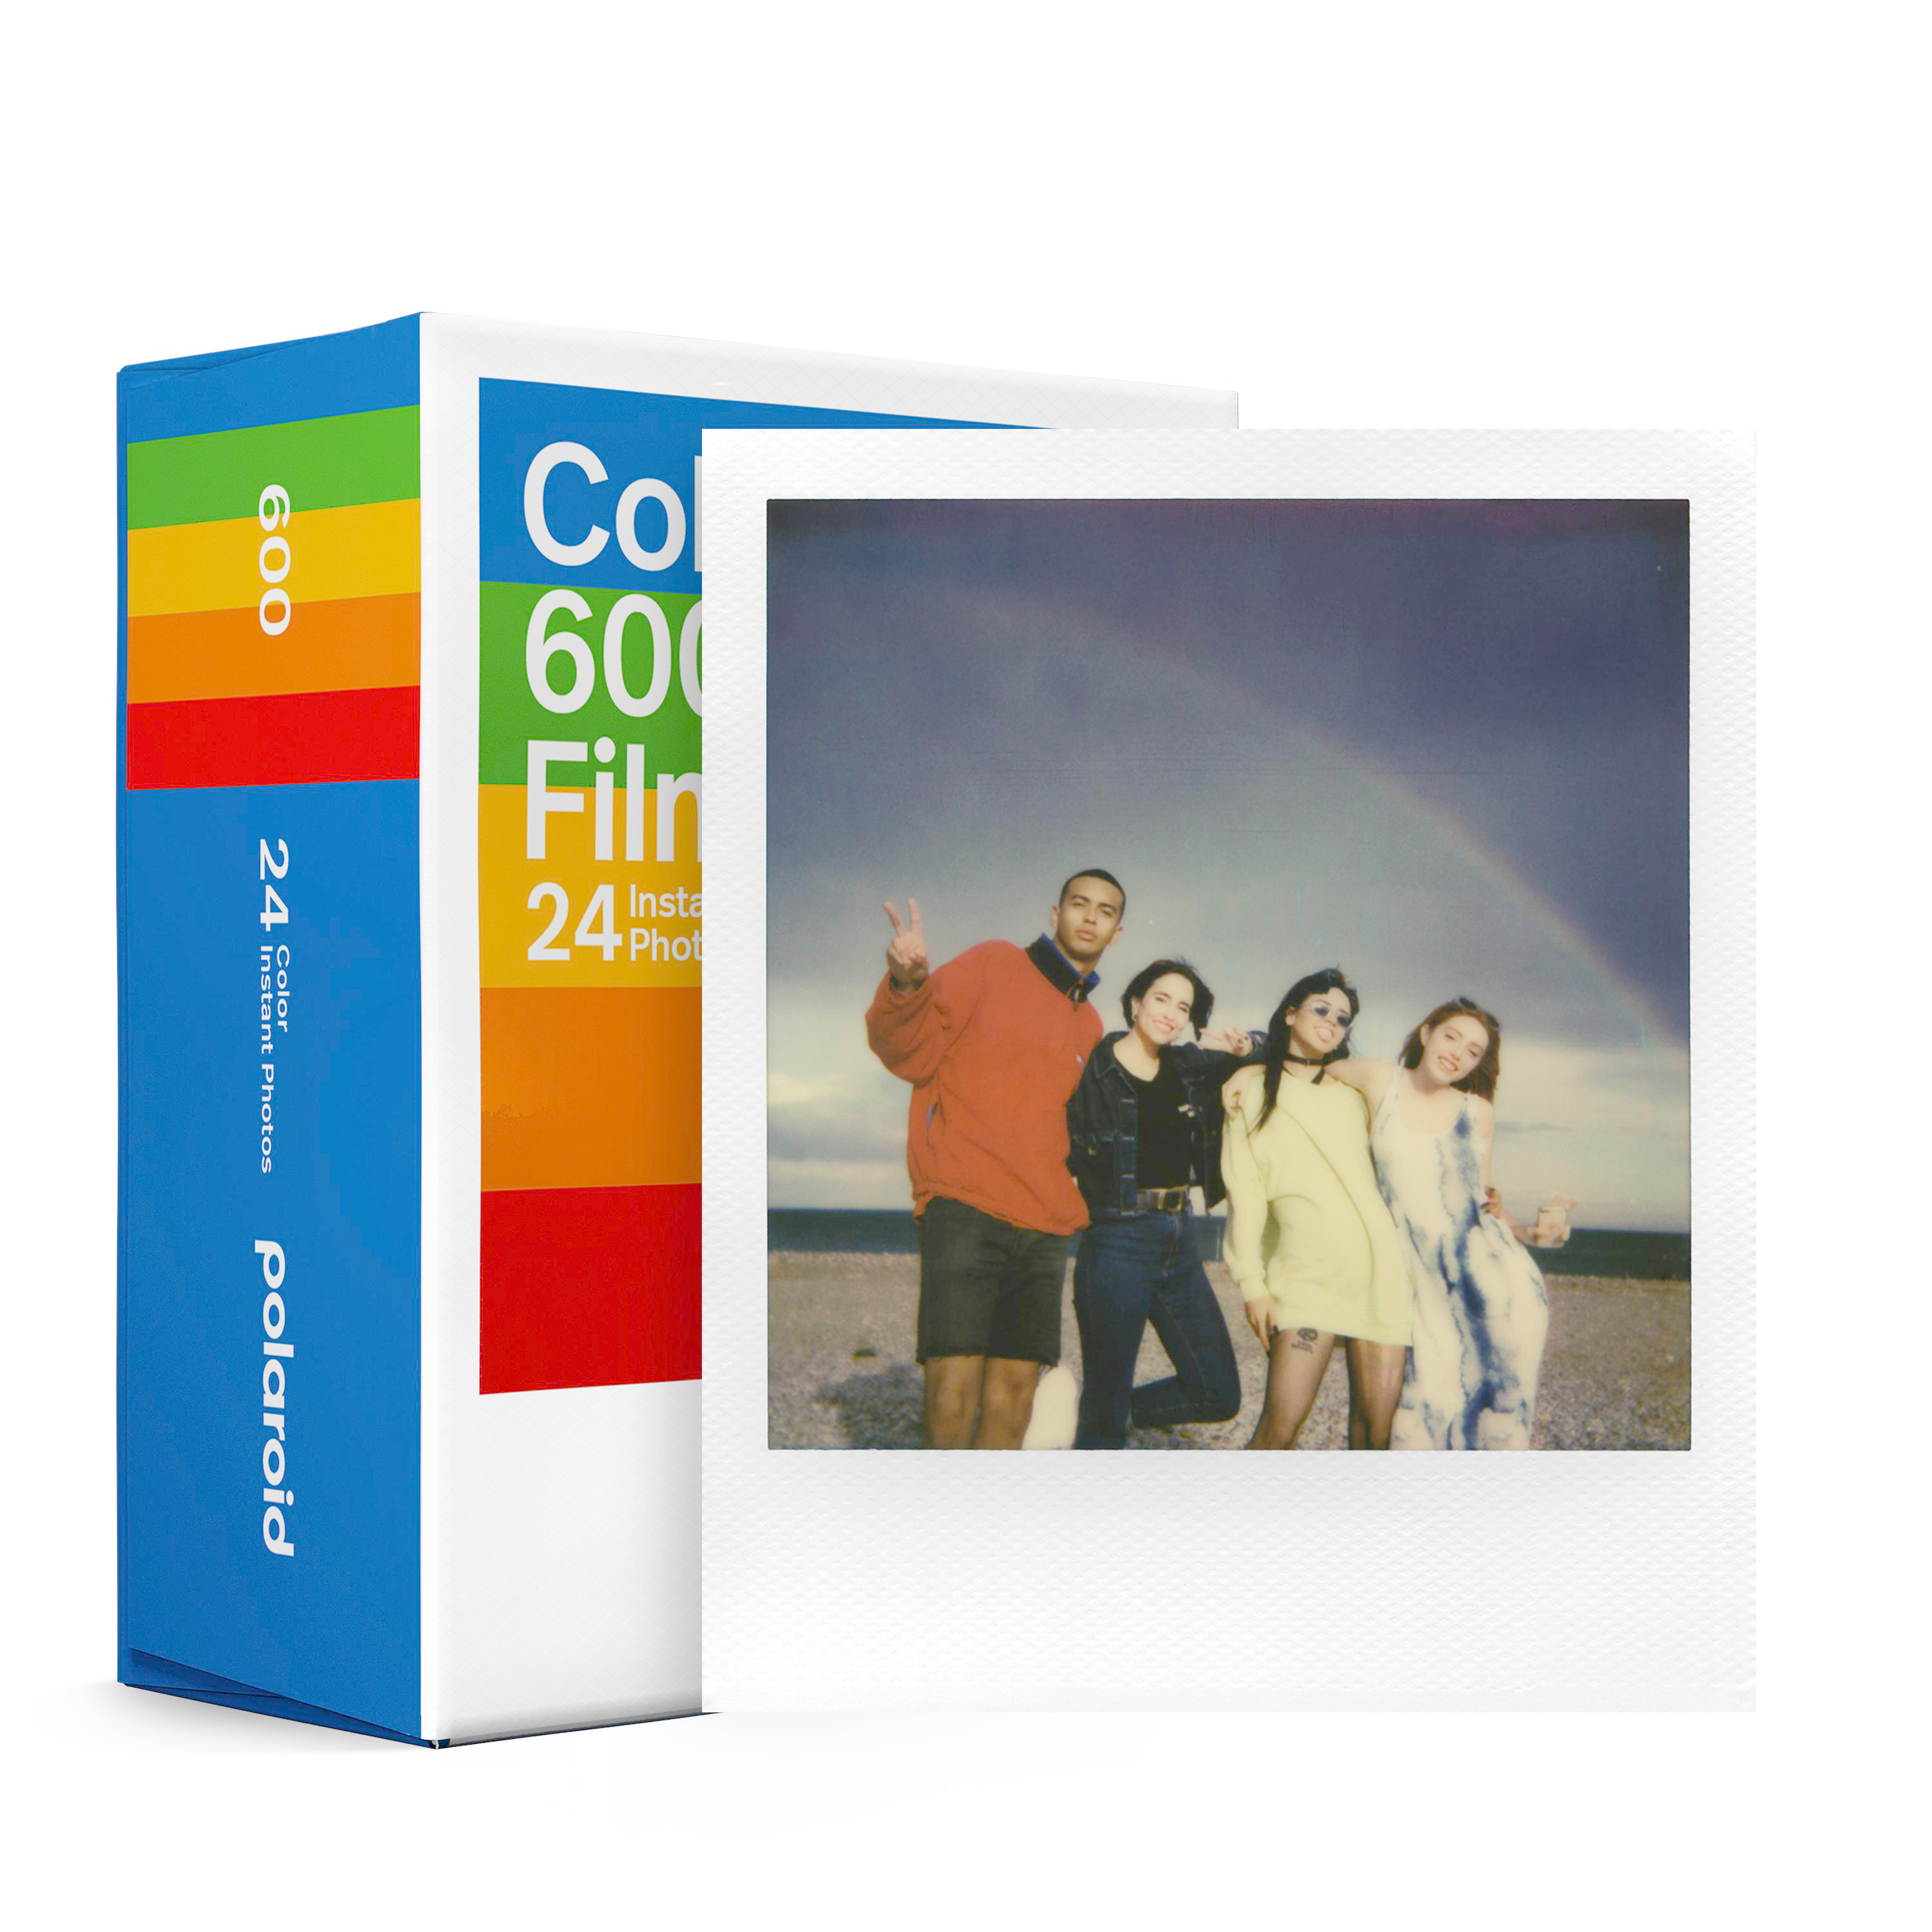 3x8 Color Triple Standardfilm - POLAROID Film 600 Pack